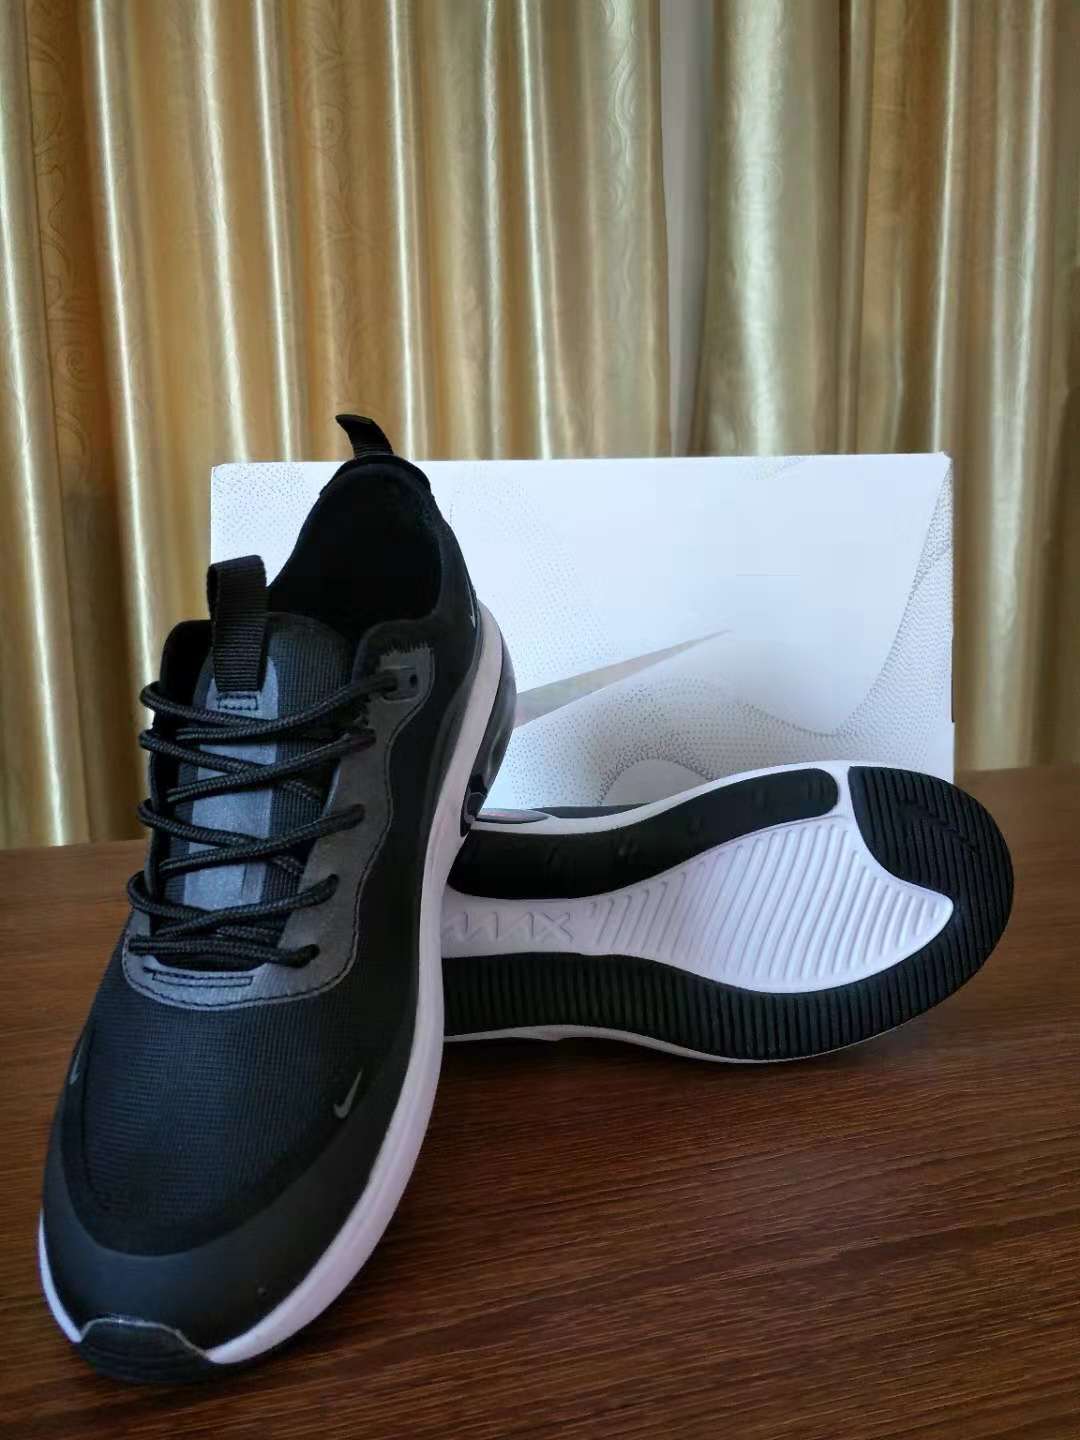 2020 Women Nike Air Max Dia Black White For Women